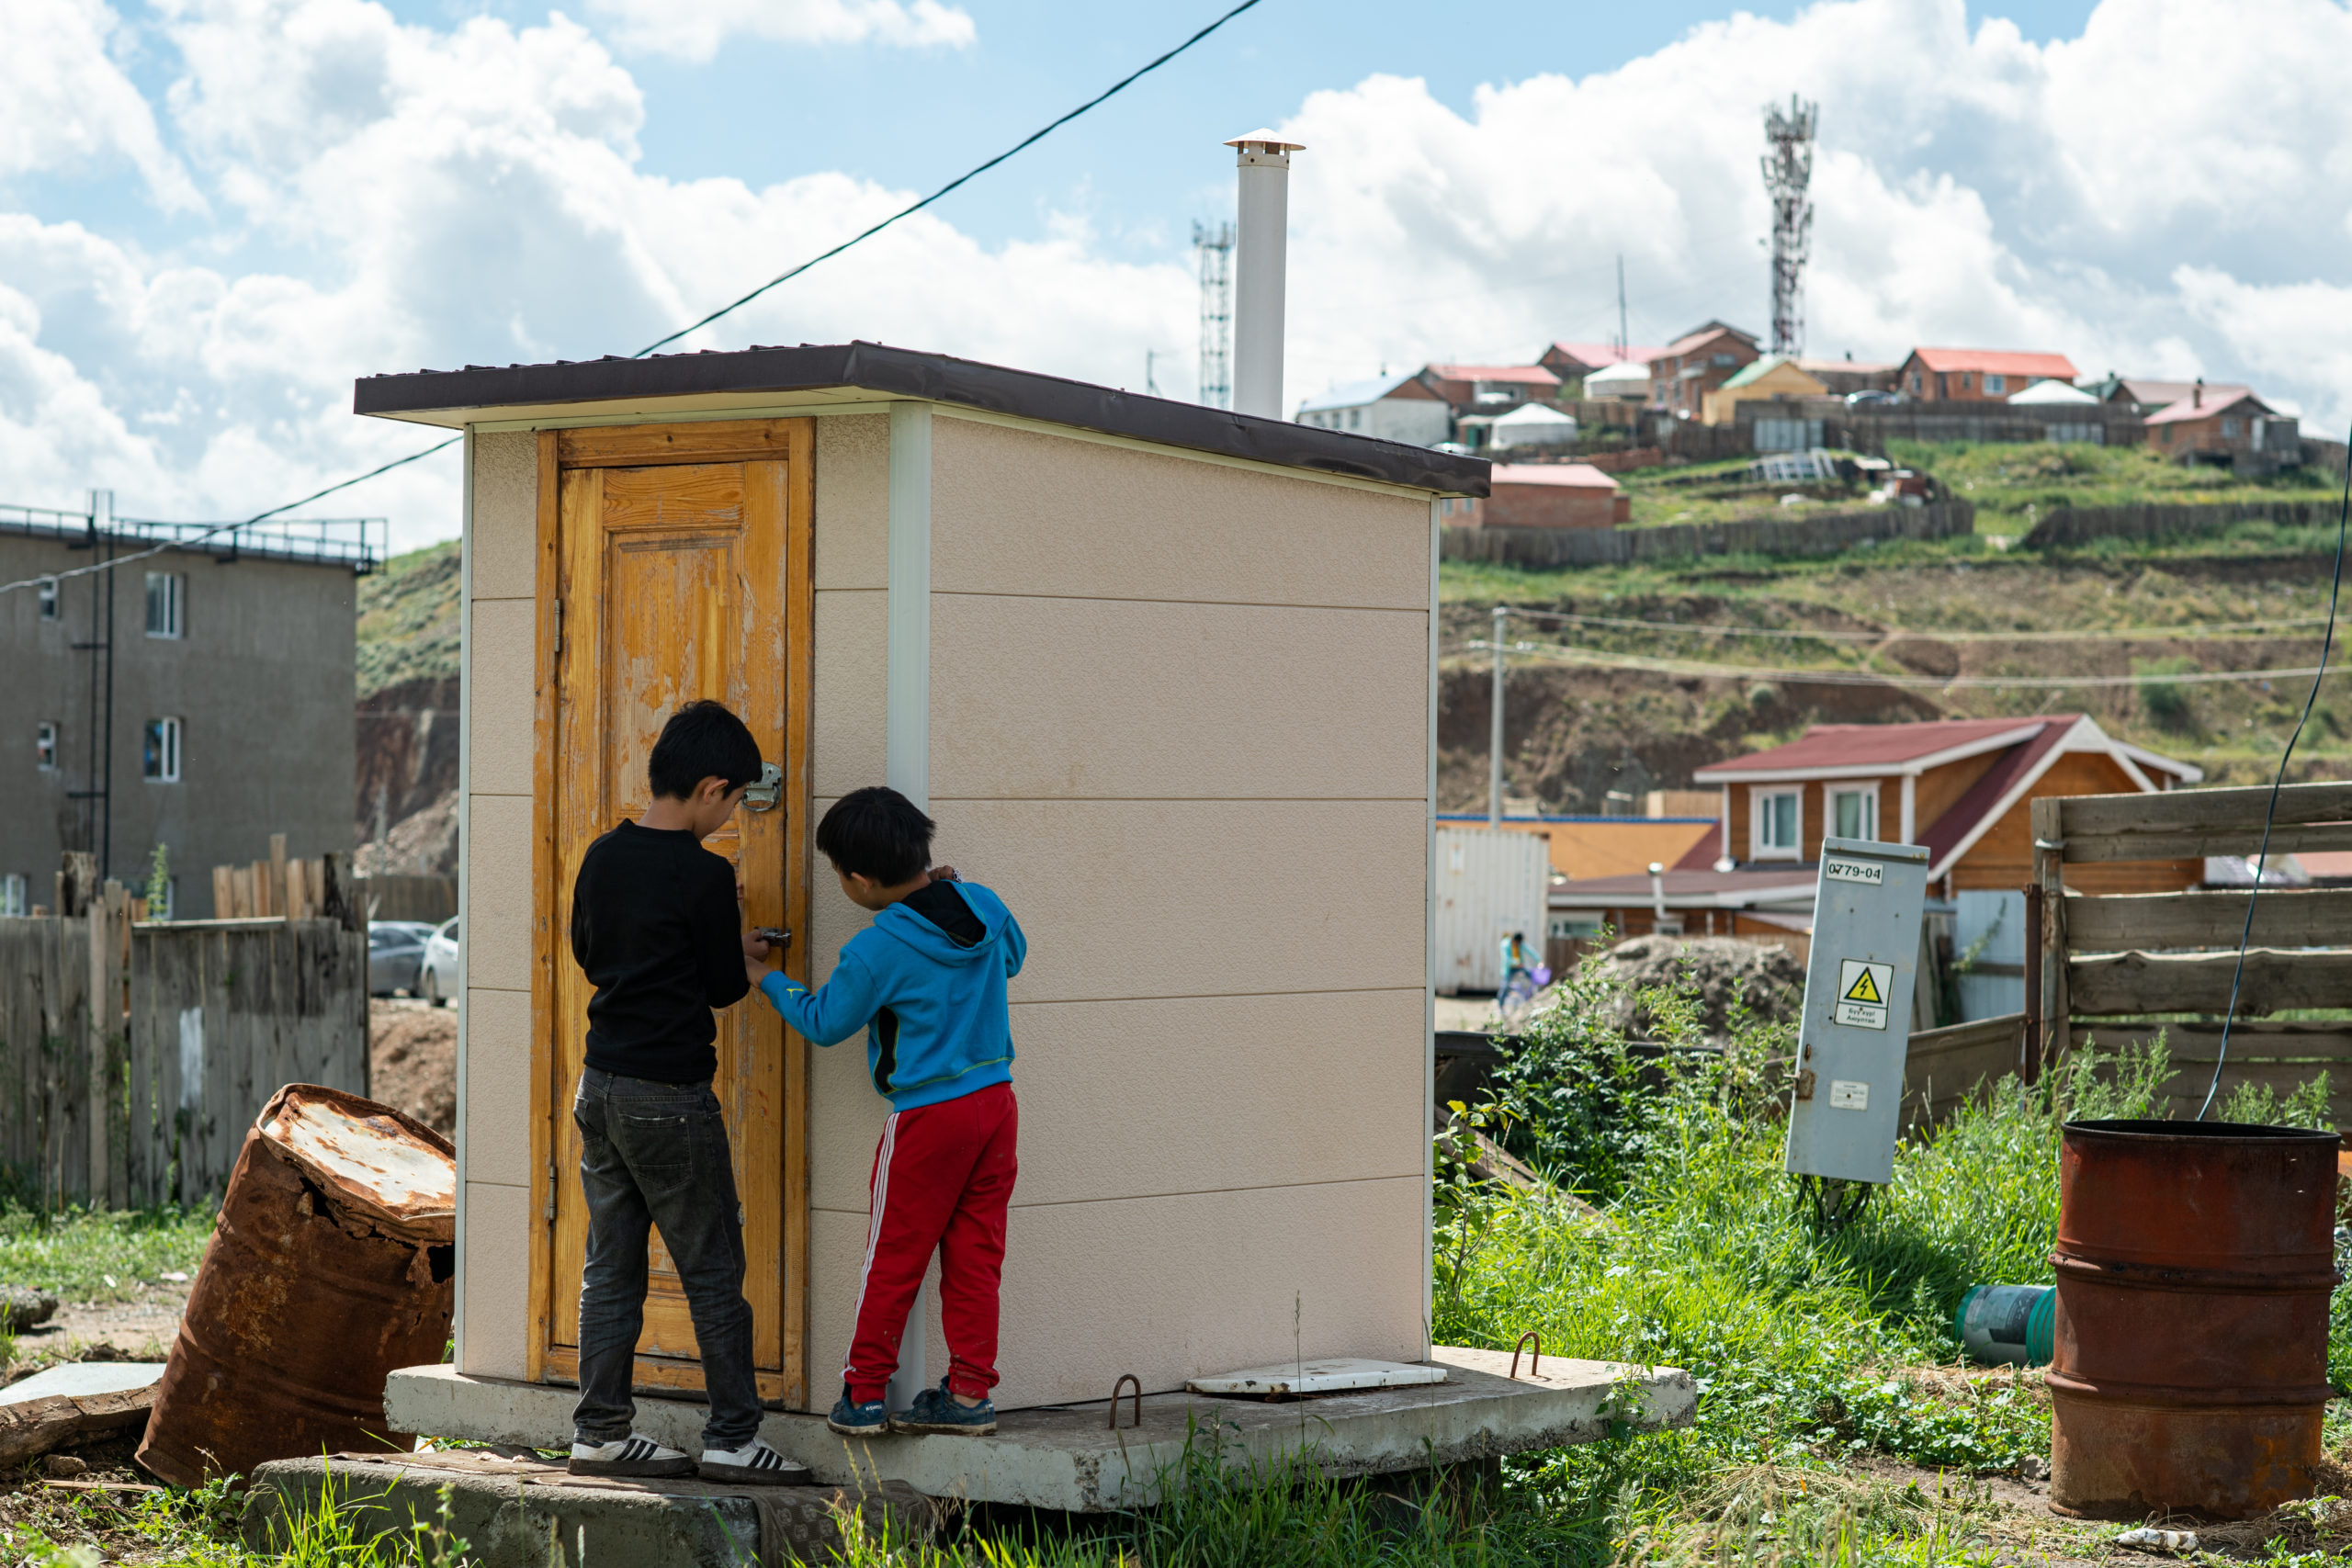 two children standing near outdoor toilet